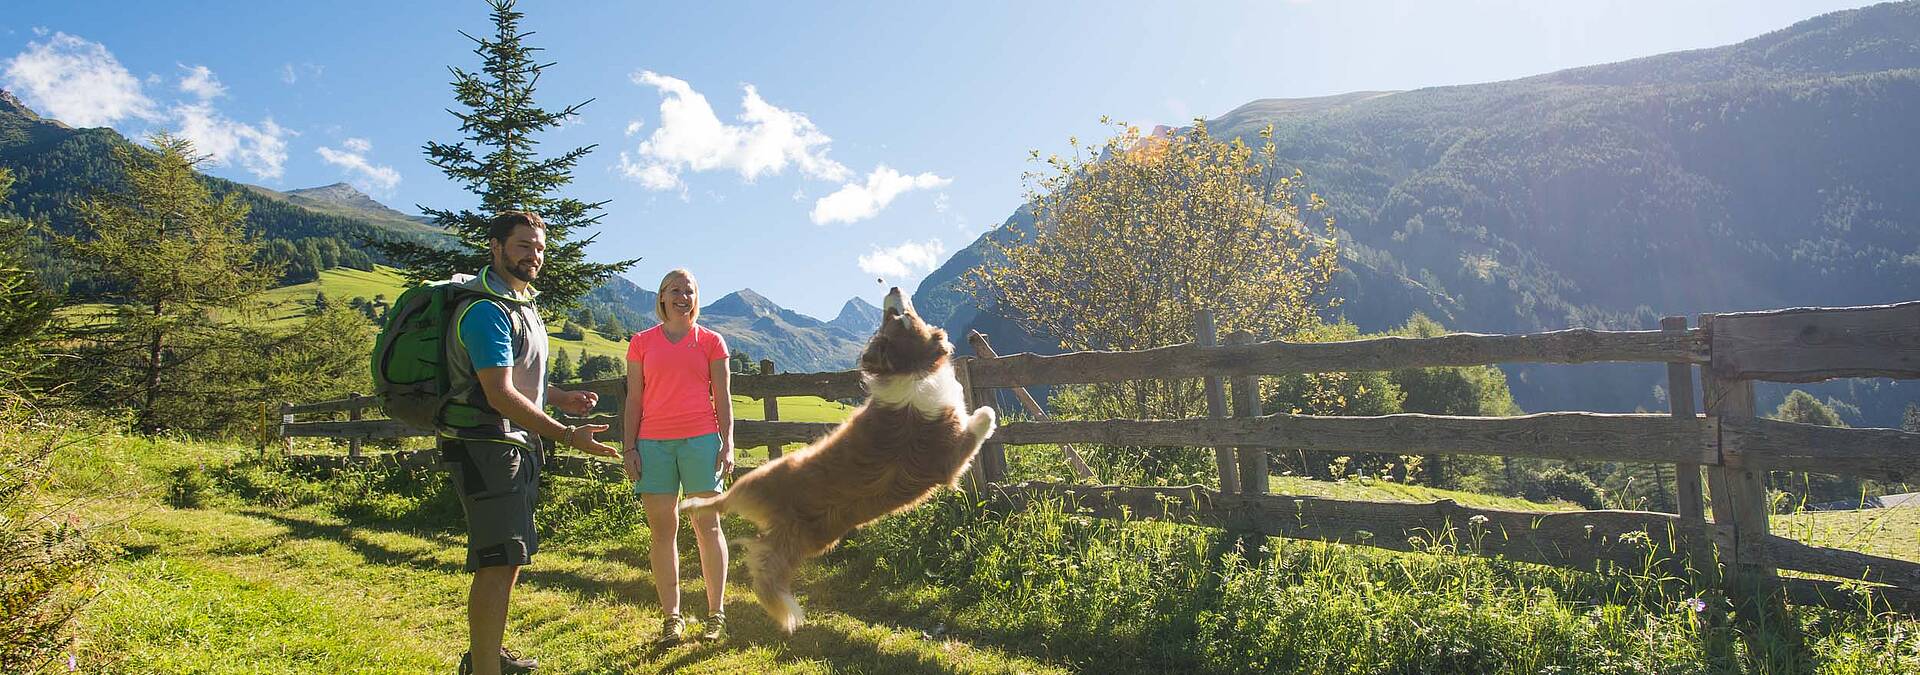 Wandern im Nationalpark Hohe Tauern mit Hund_Eggerhof